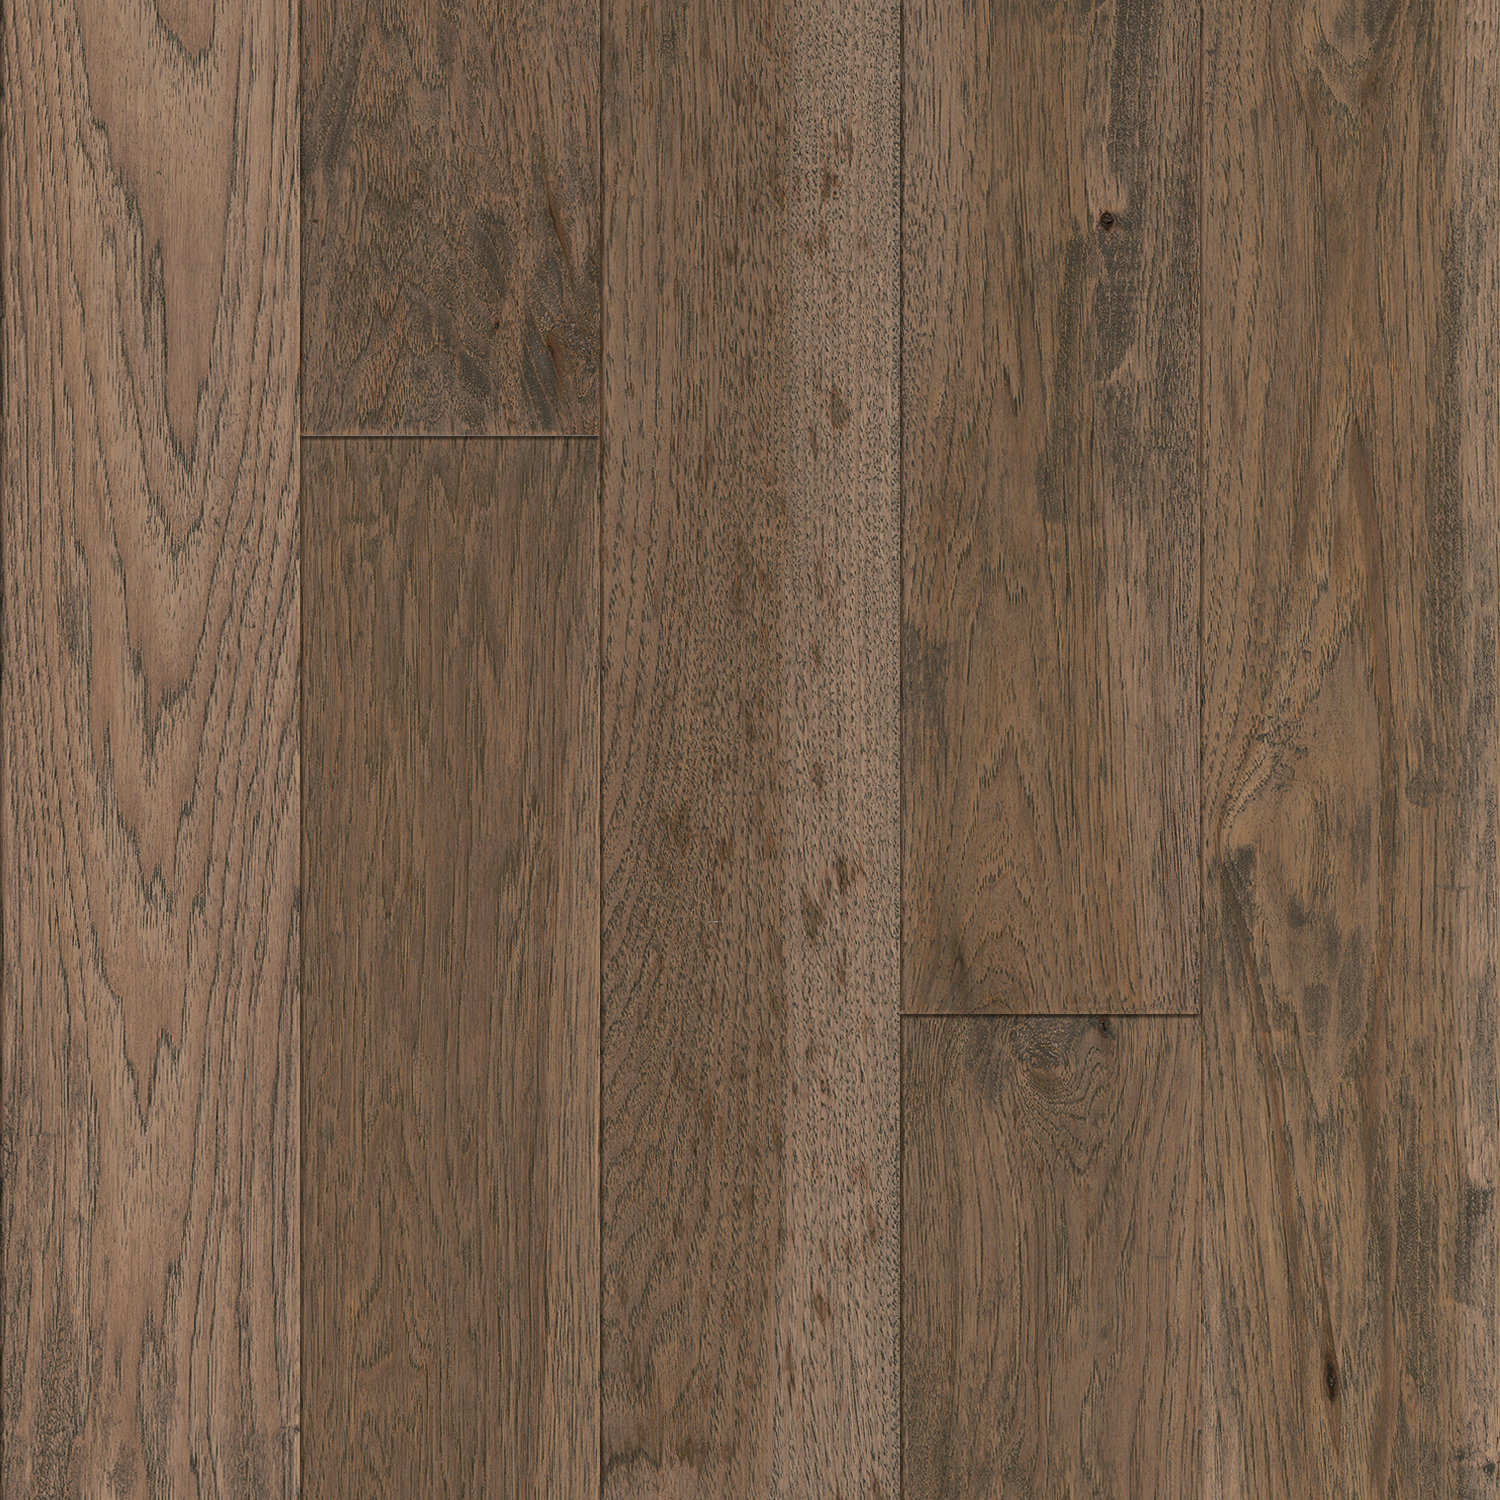 Hickory Solid Hardwood Sas526, Hickory Heritage Grey Solid Hardwood Flooring